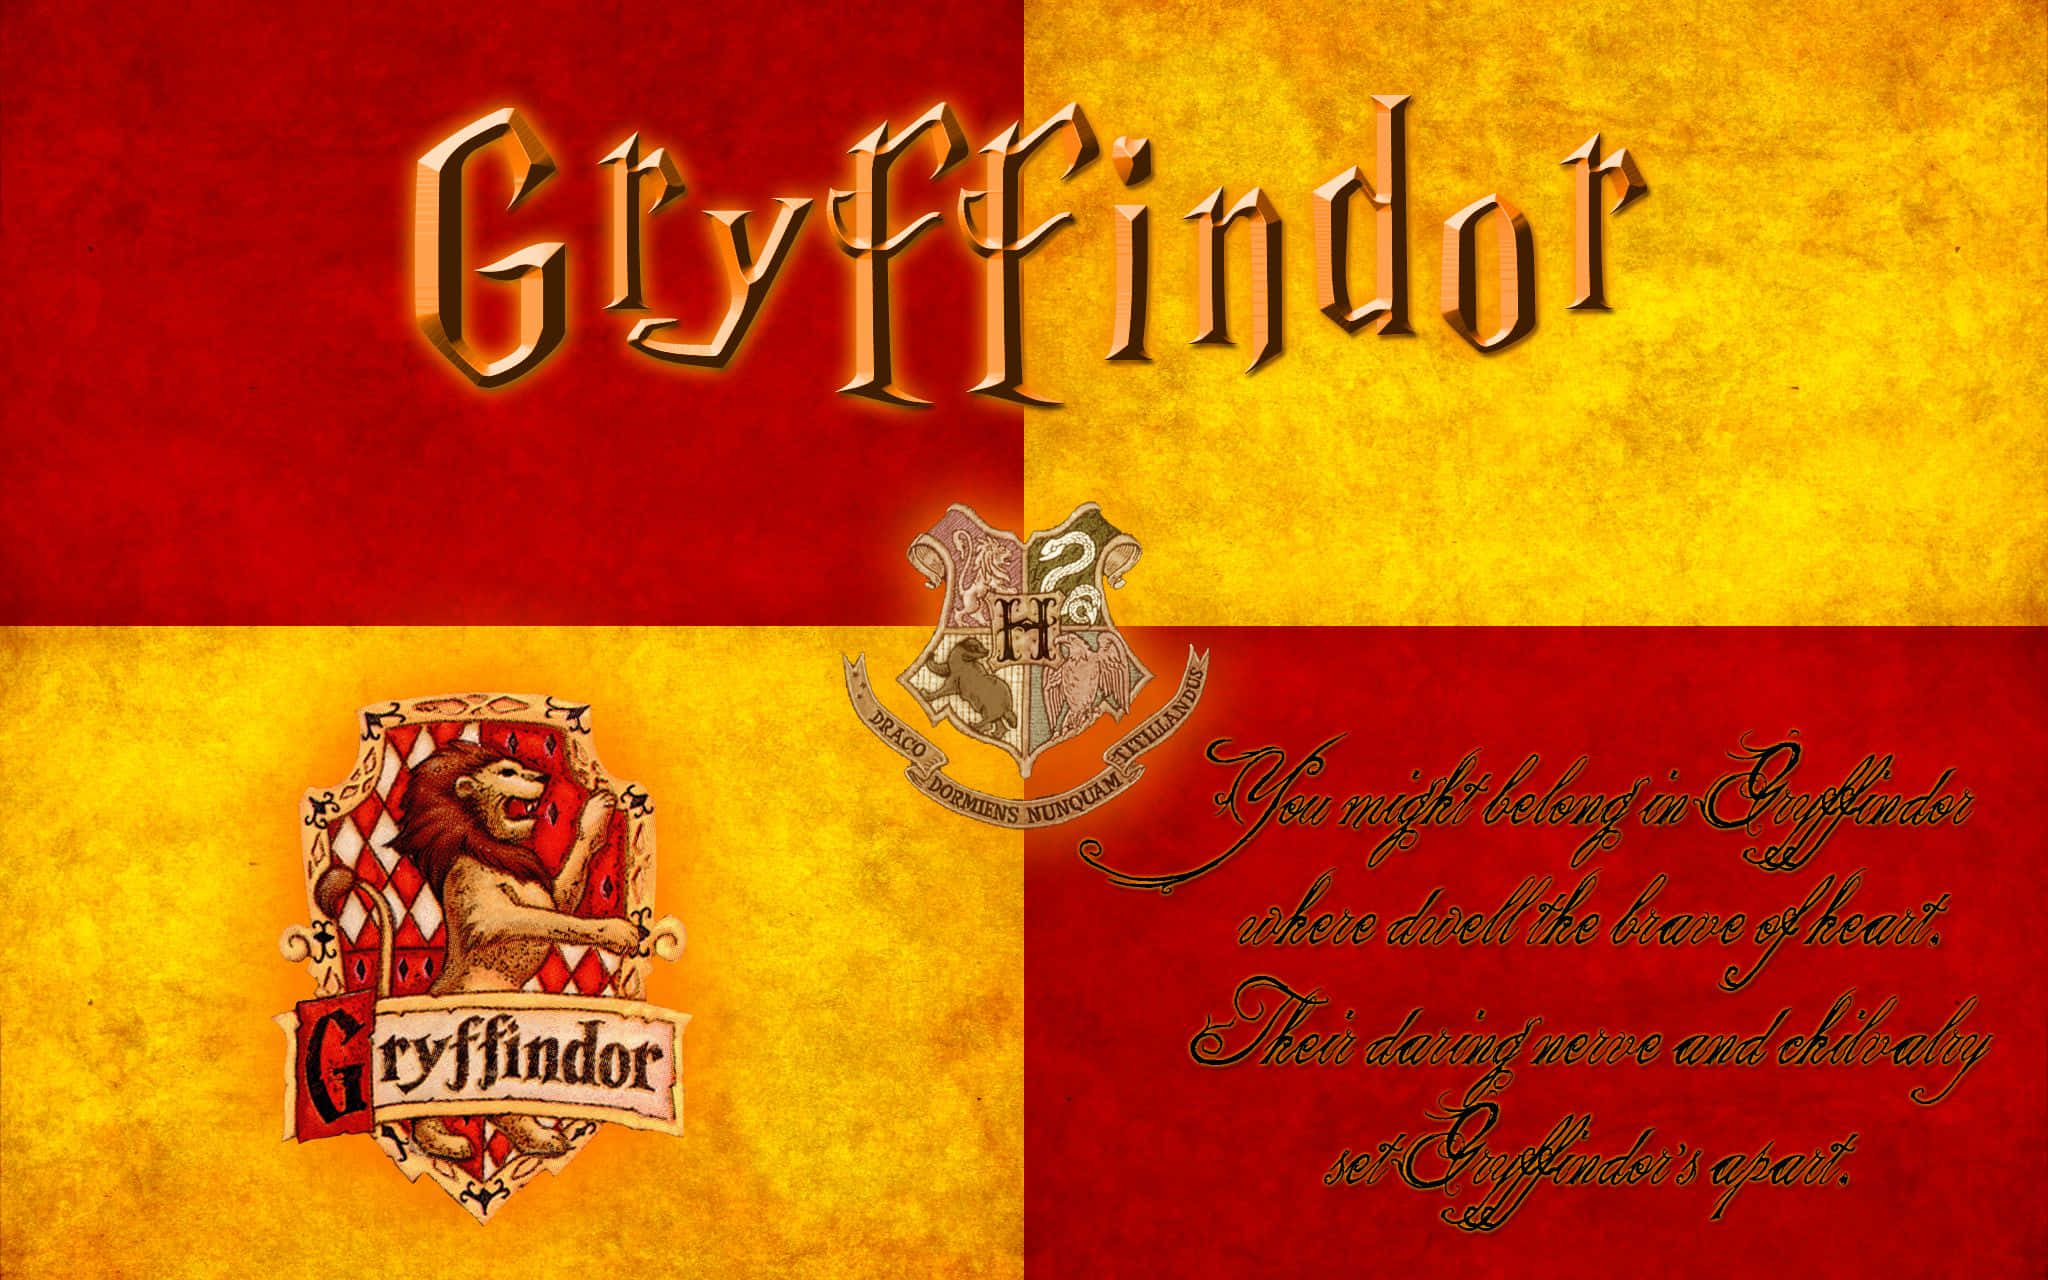 Detmodiga Och Tappert Gryffindor-huset!